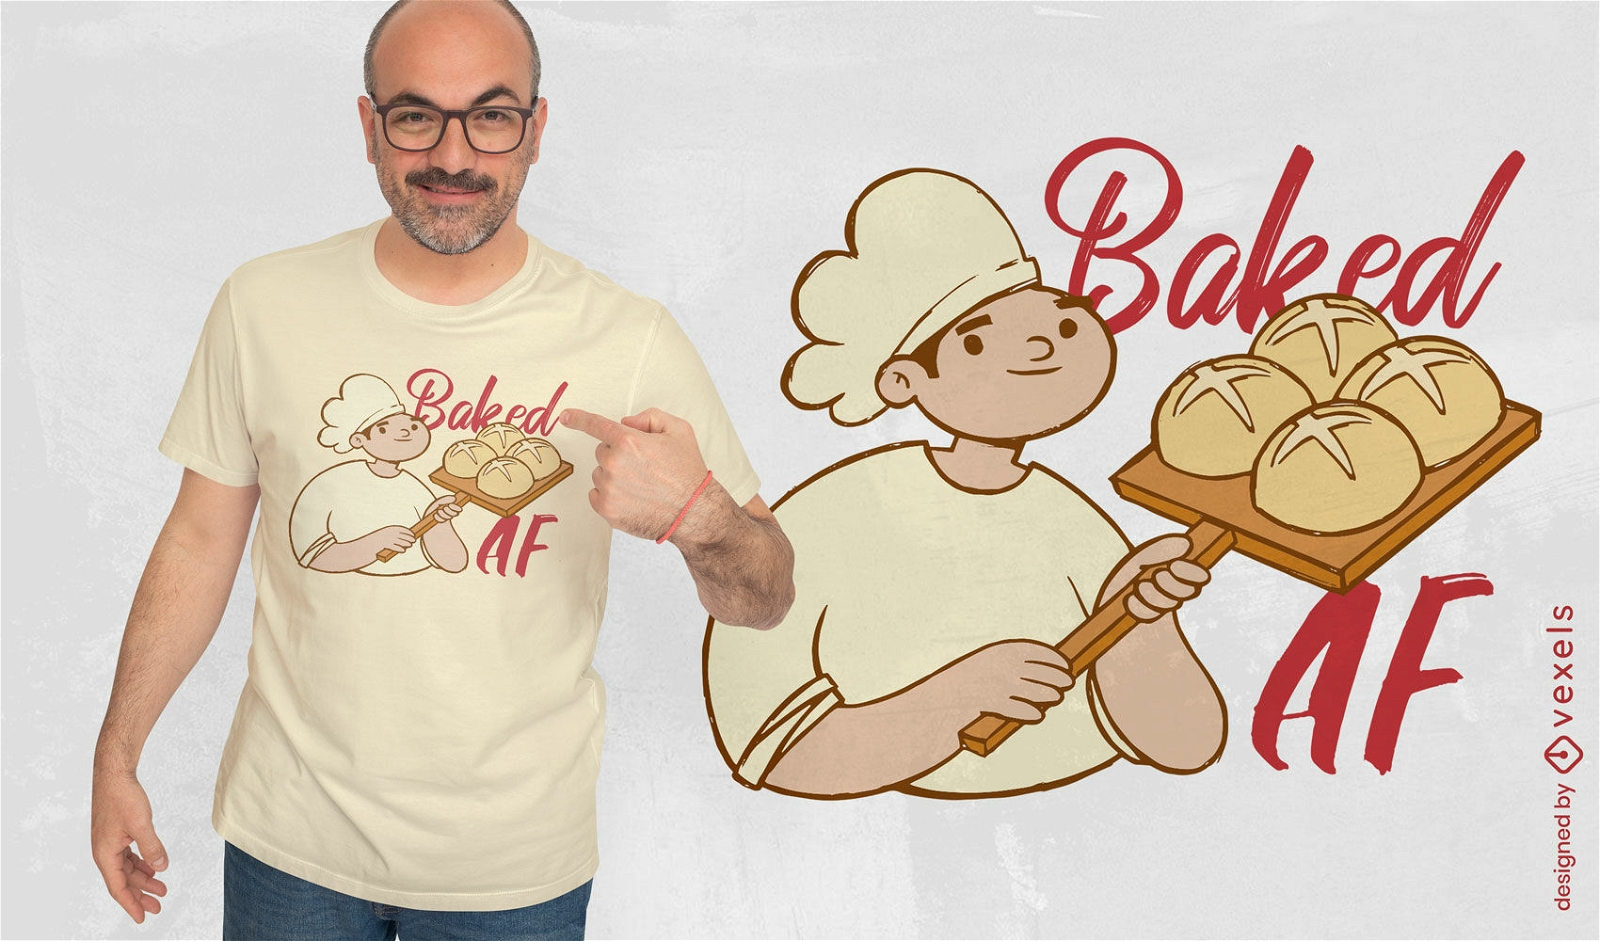 Bread bakery t-shirt design